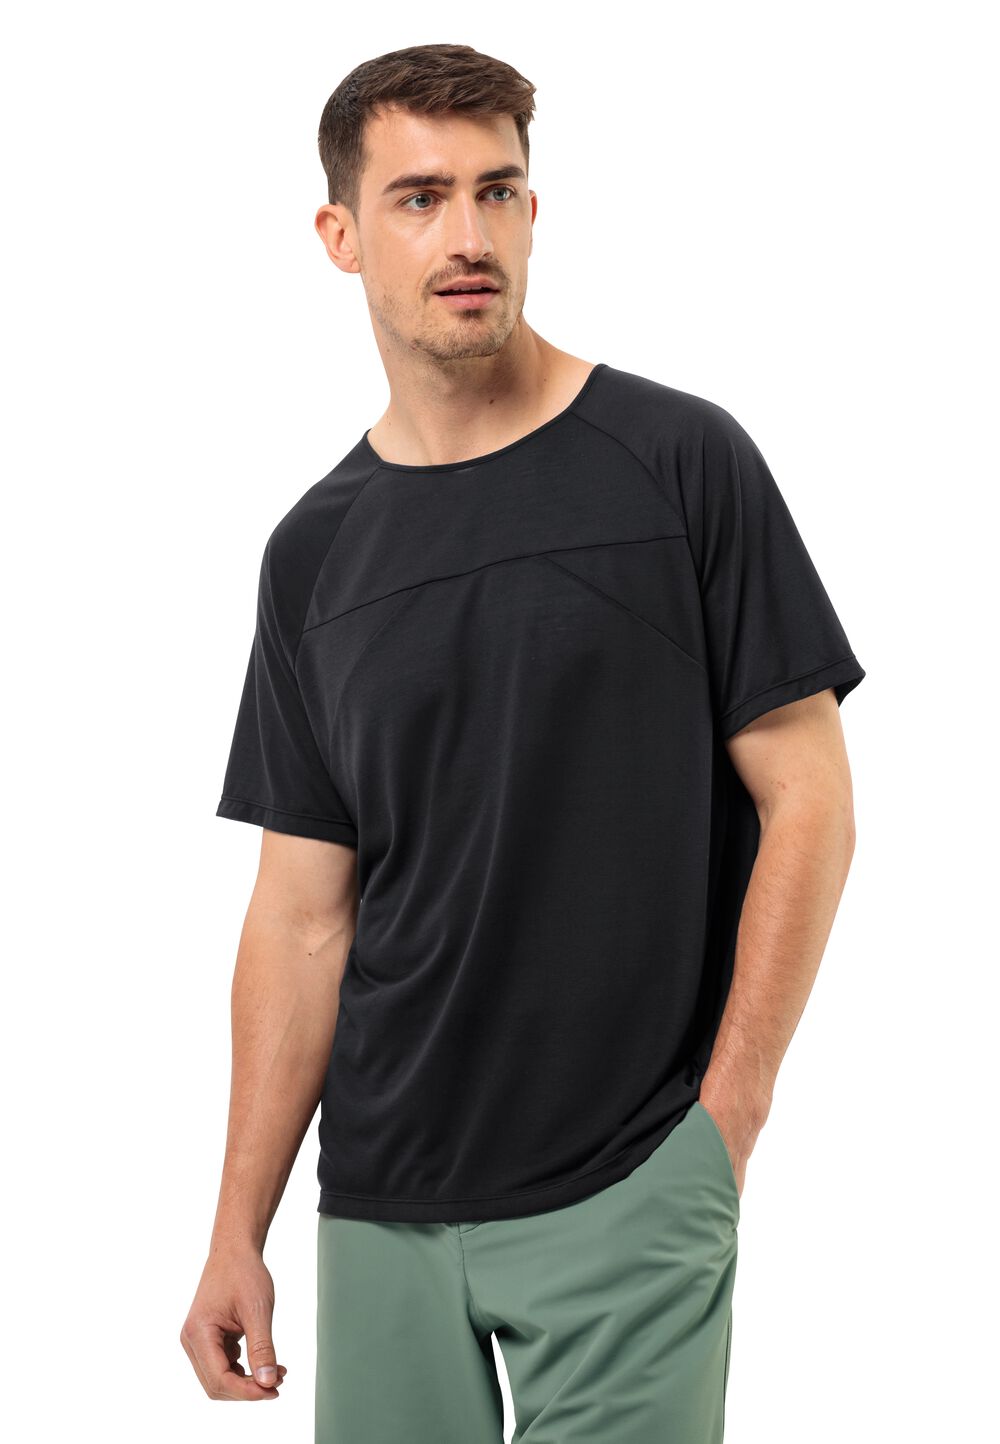 Jack Wolfskin Wanderword T-Shirt Men Functioneel shirt Heren S zwart granite black